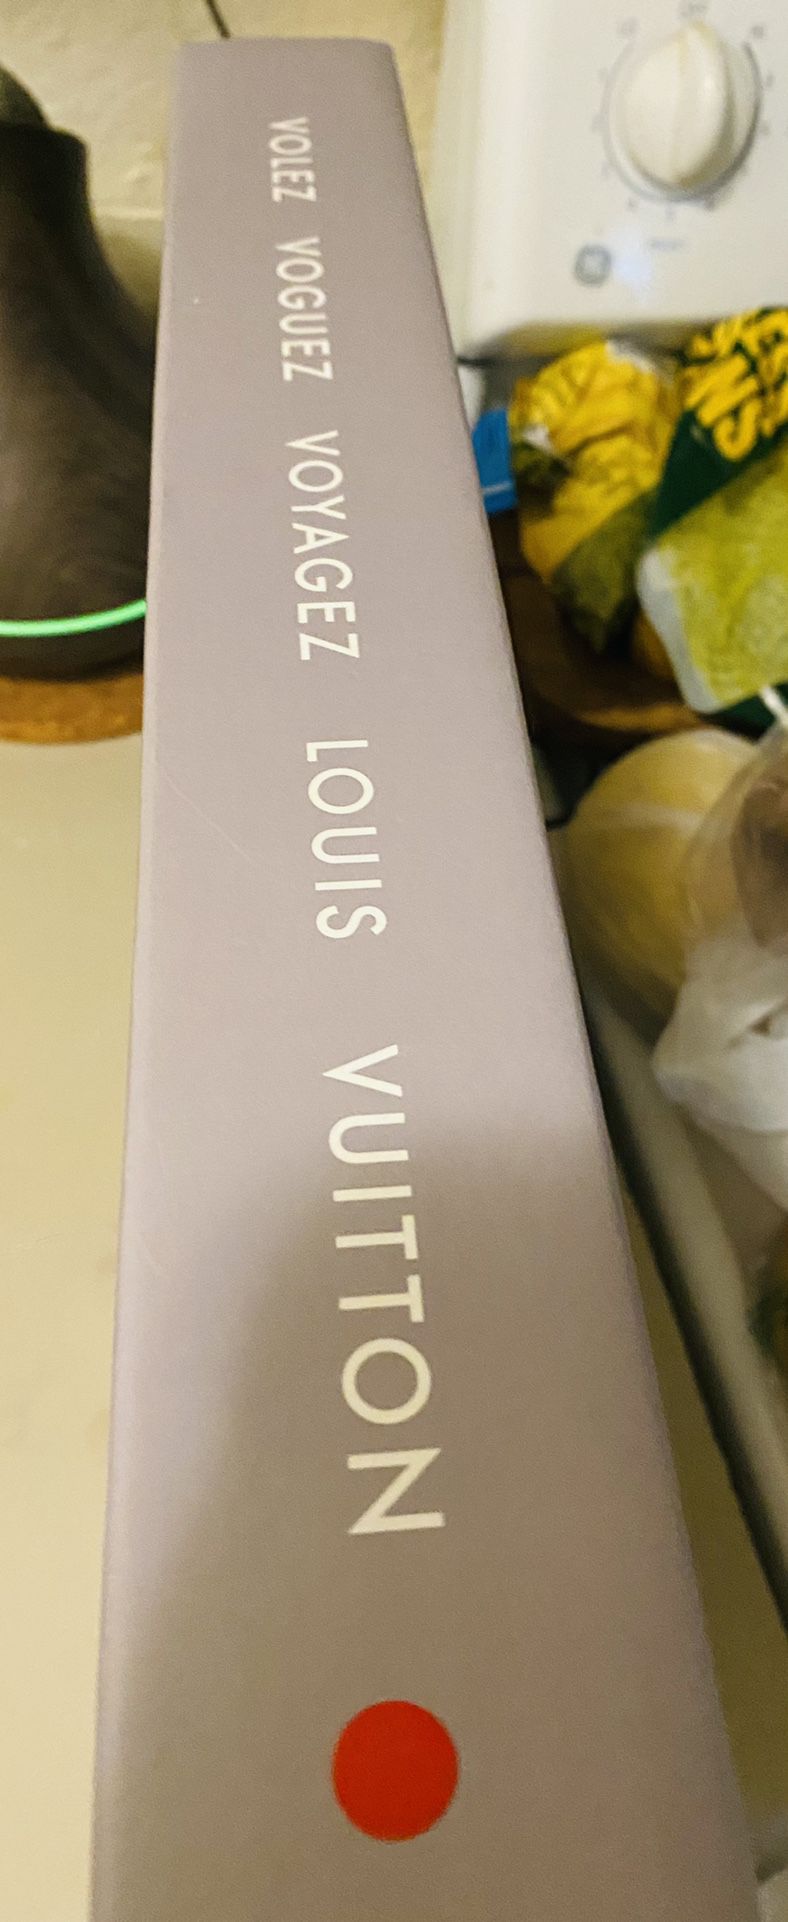 Louis Vuitton Windows Assouline Collectors Book for Sale in Las Vegas, NV -  OfferUp